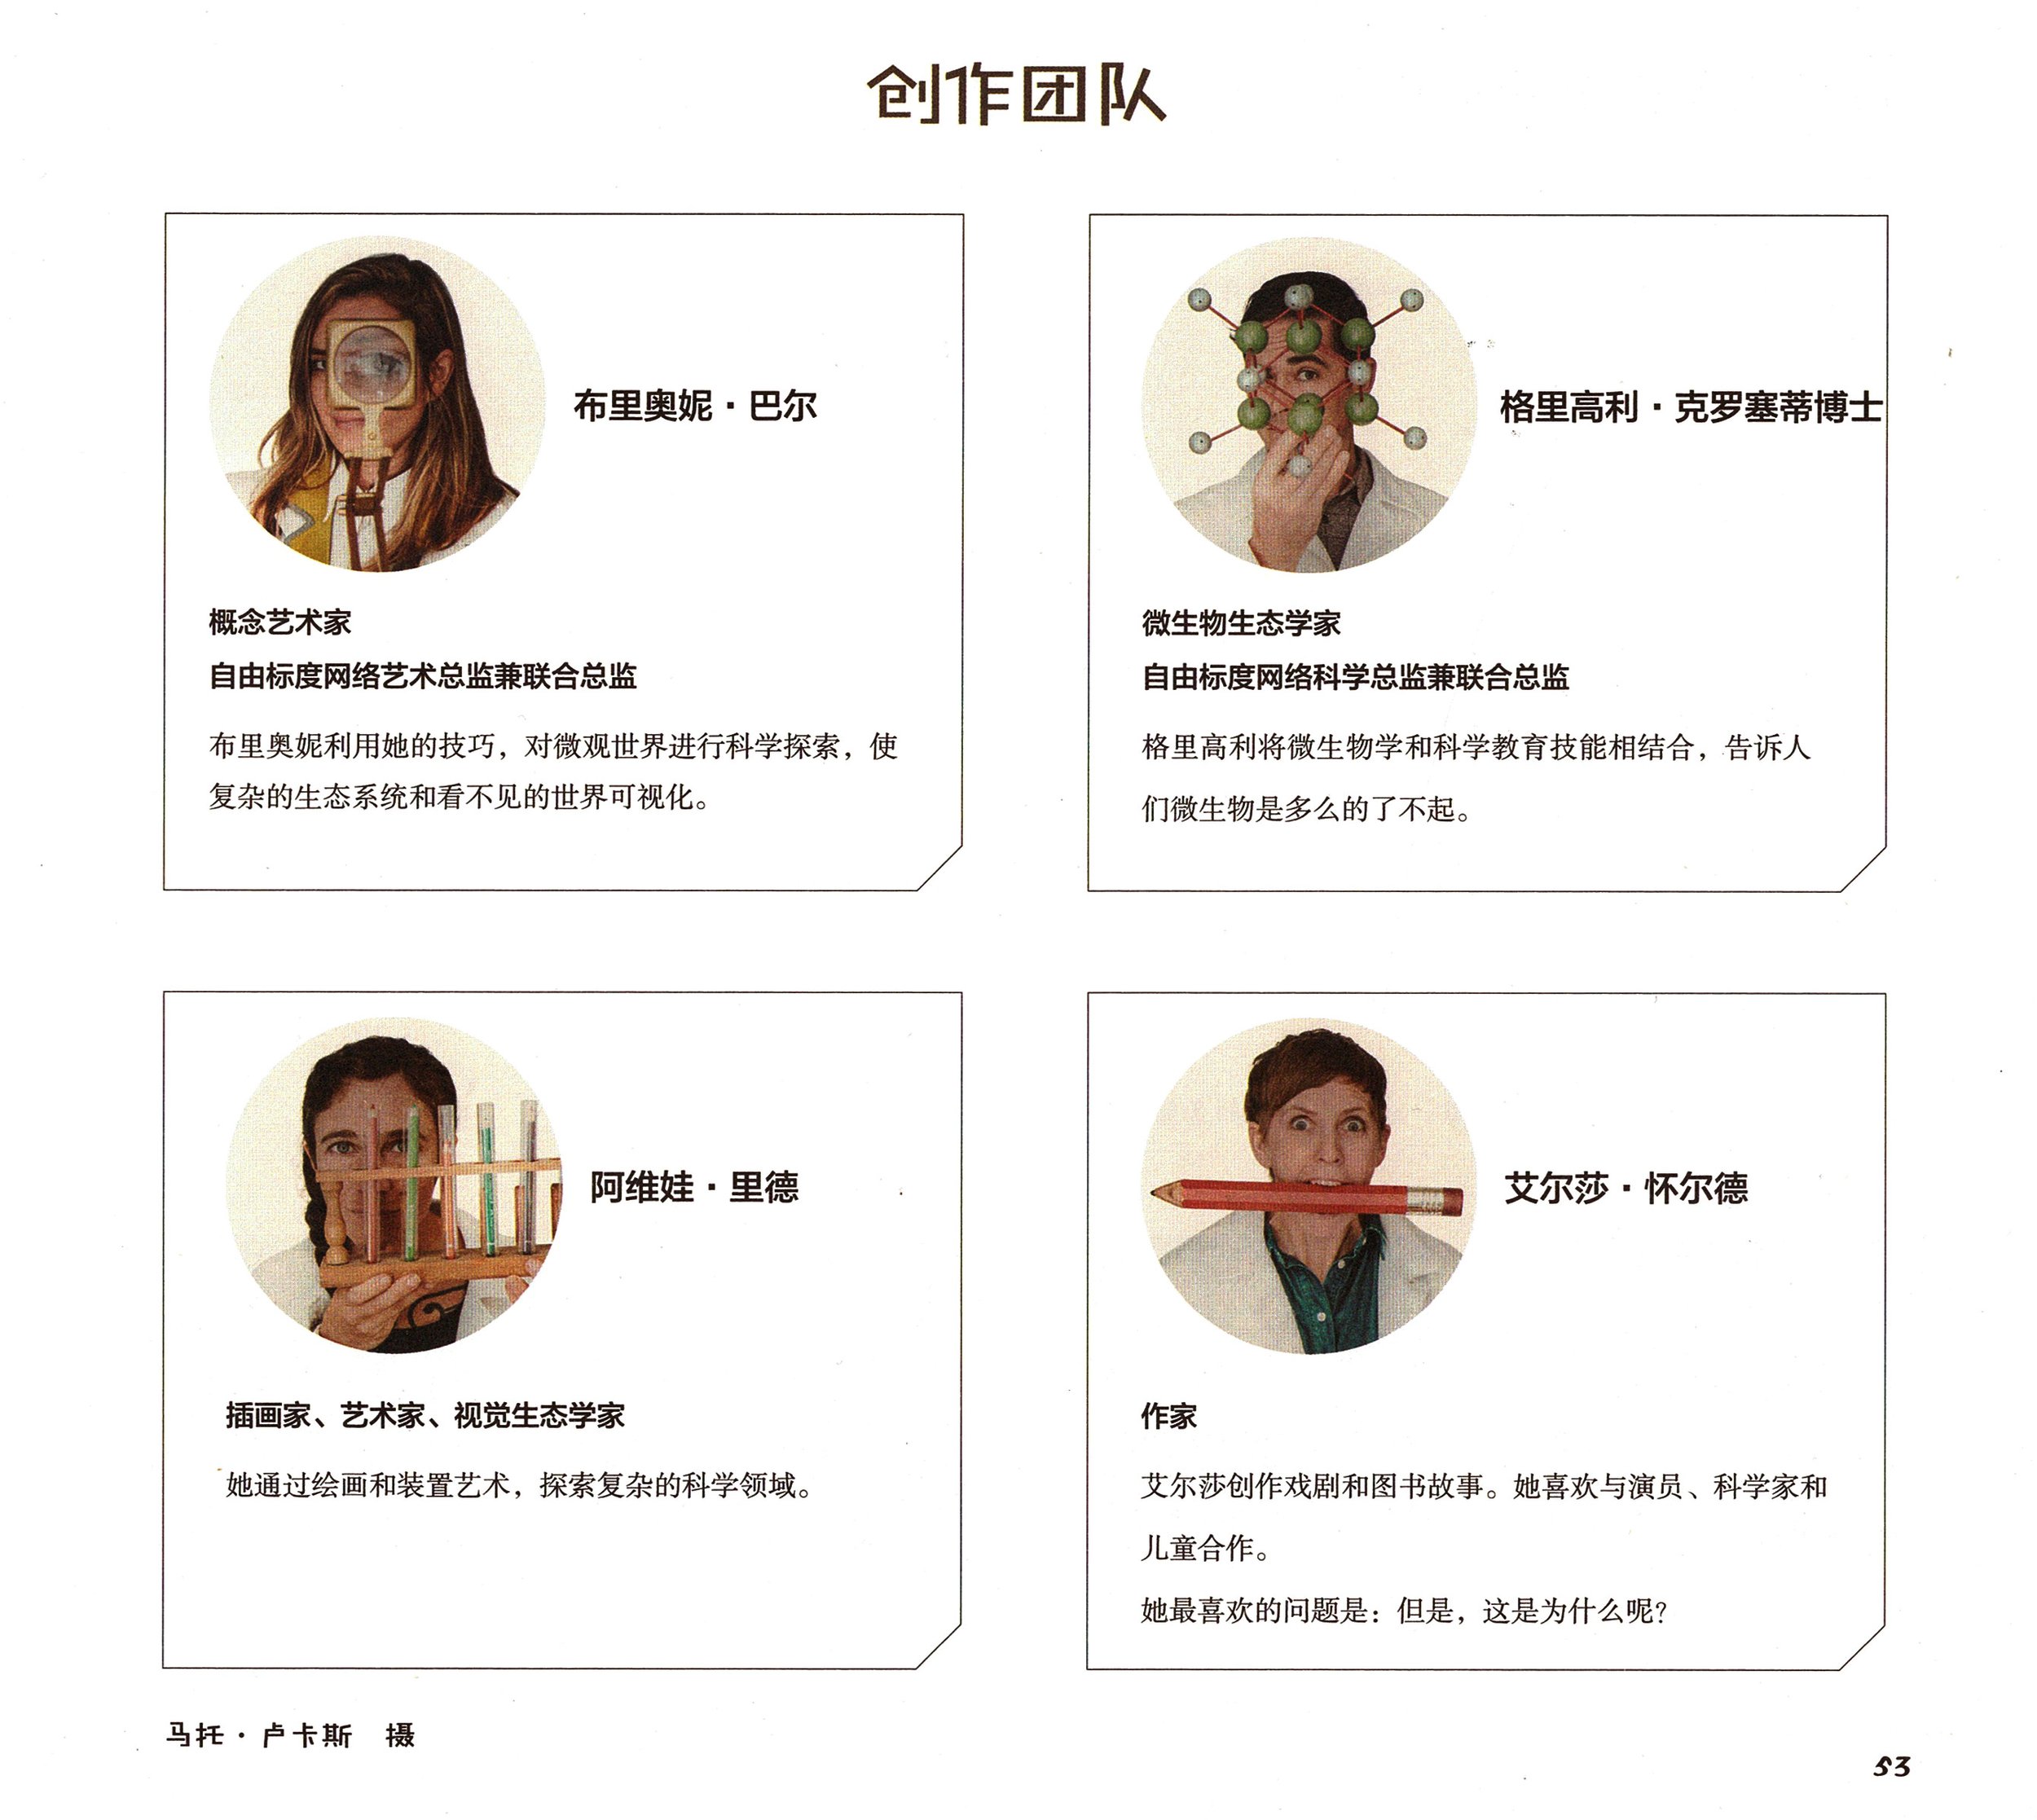 chinese-SFB-team-page.jpg